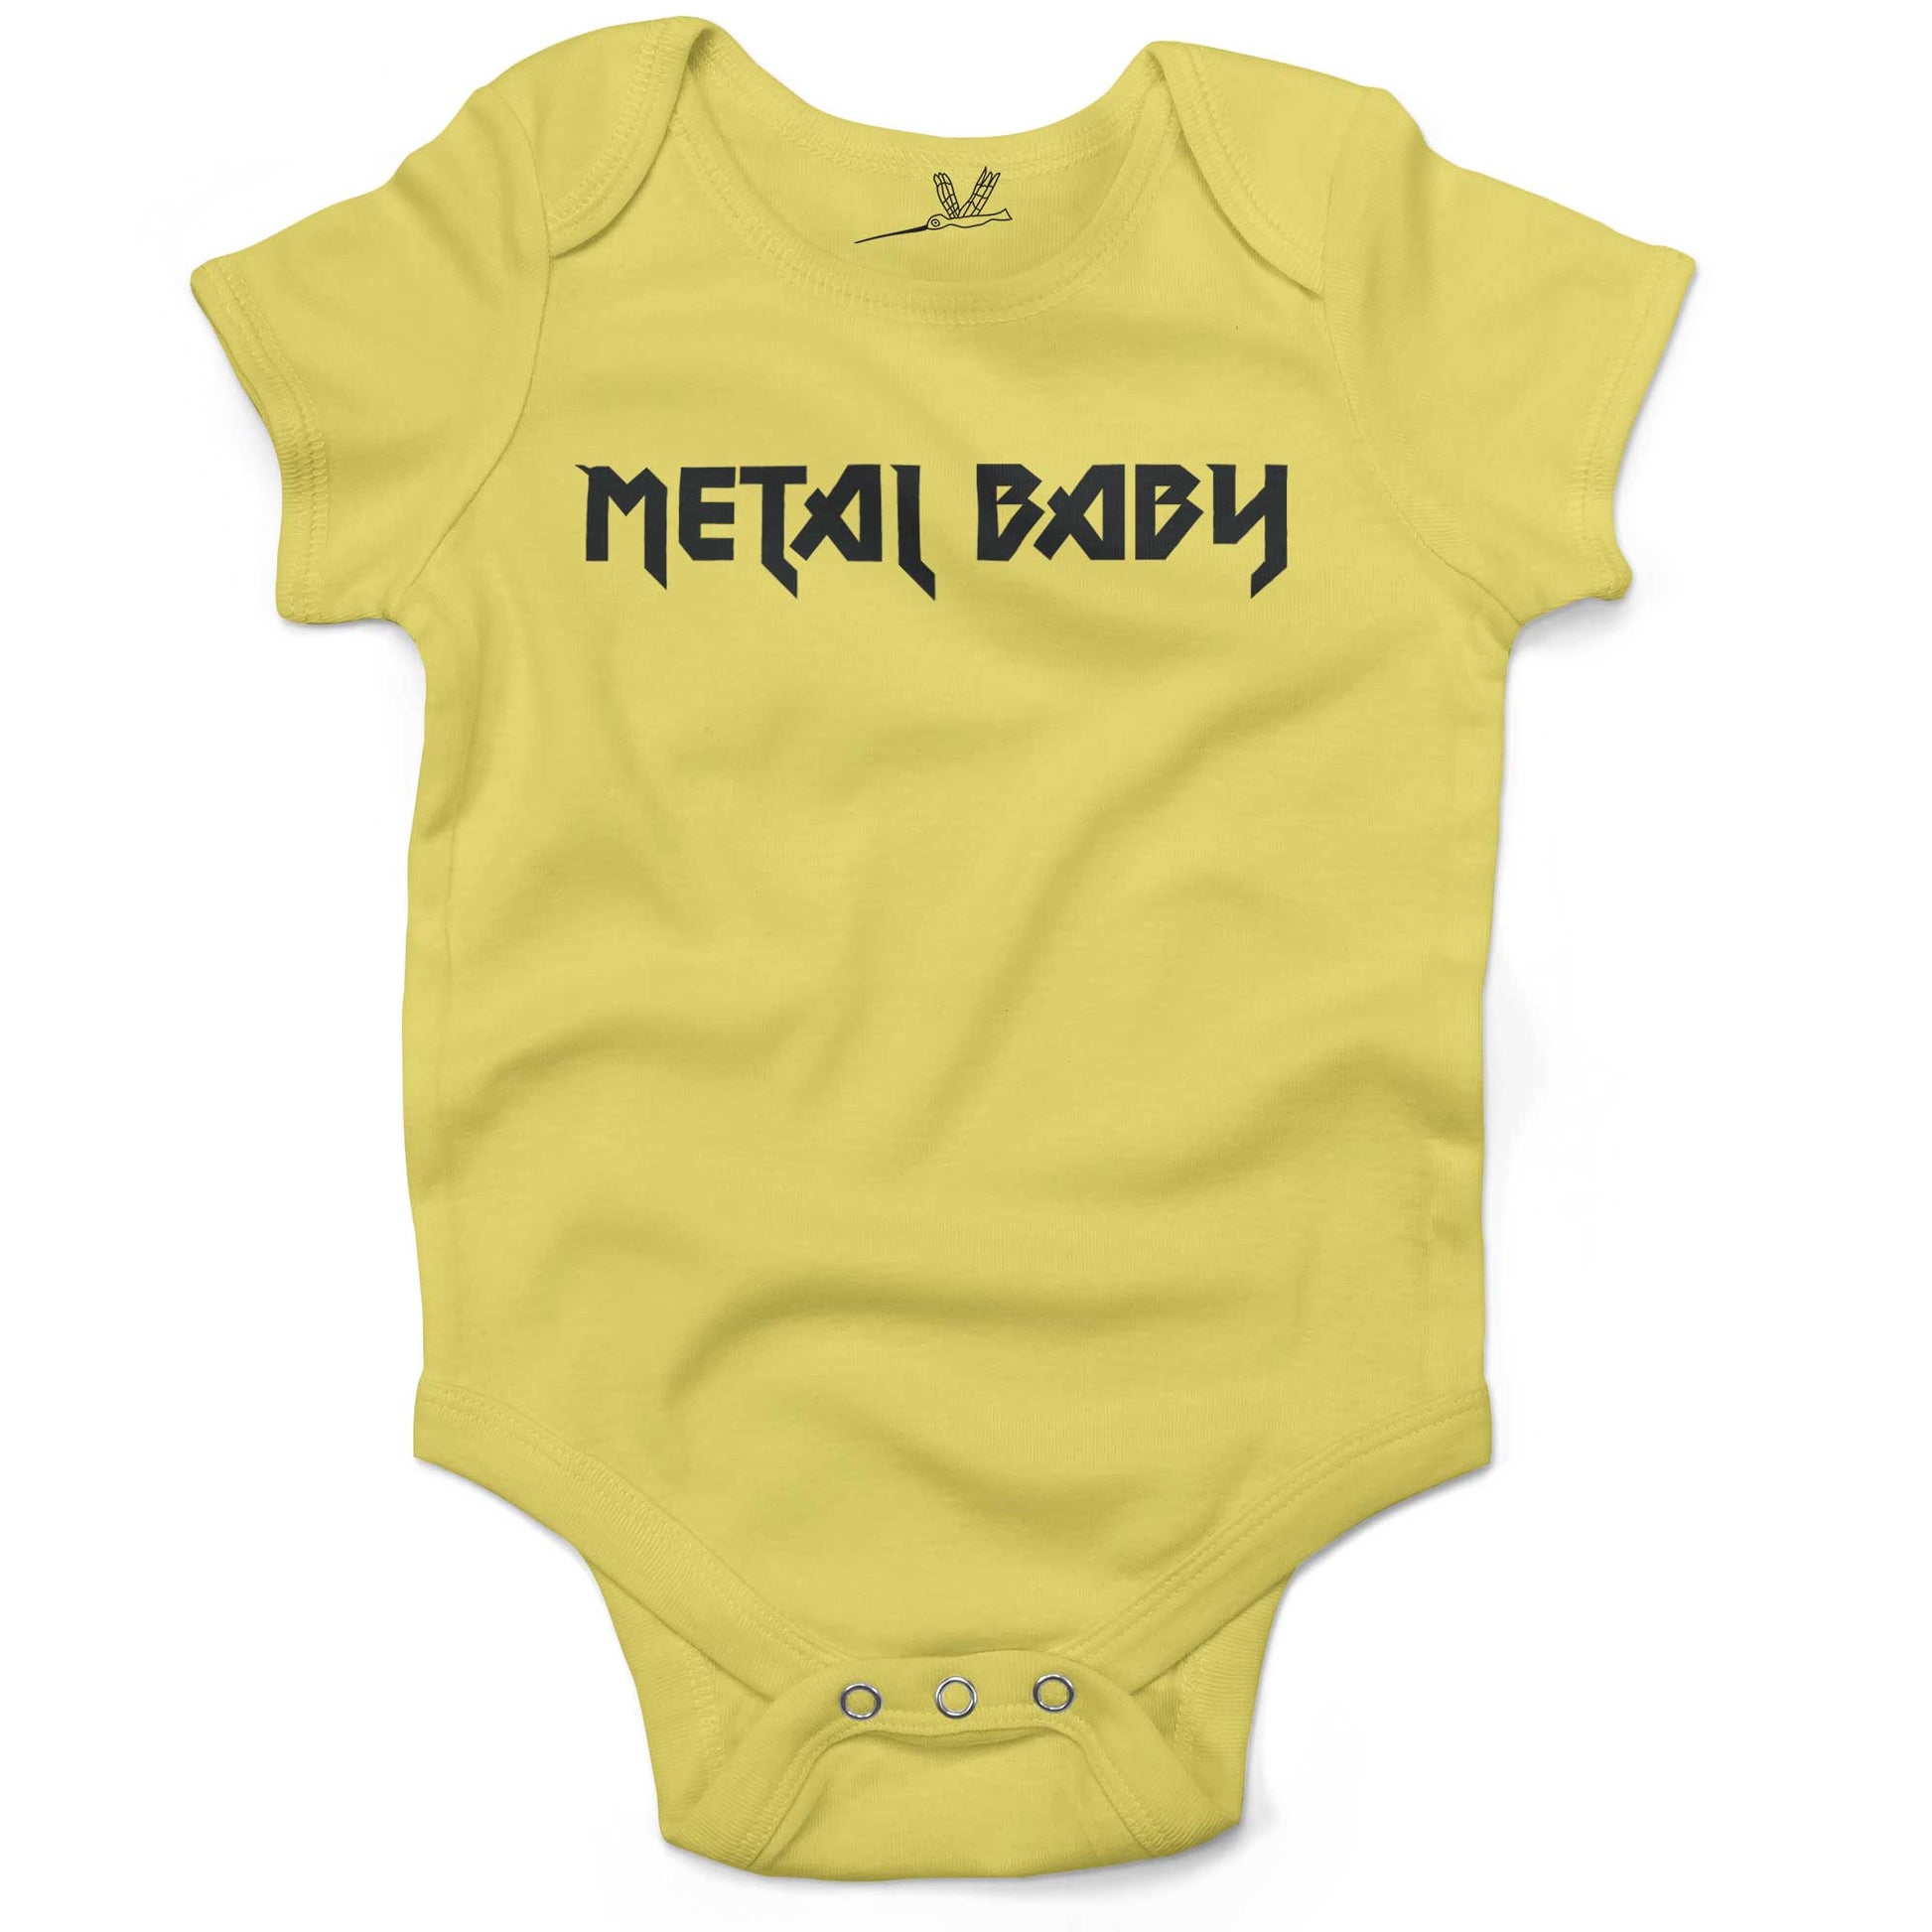 Metal Baby Infant Bodysuit or Raglan Baby Tee-Yellow-3-6 months